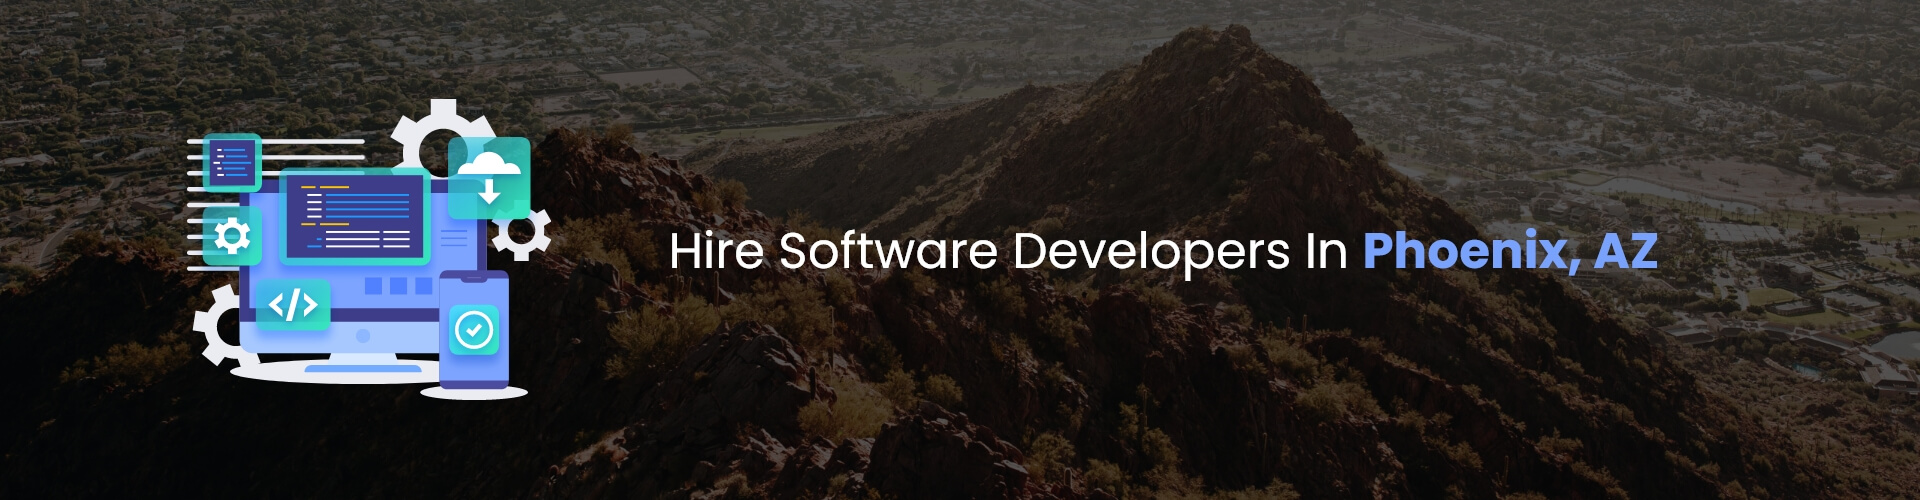 hire software developers in phoenix